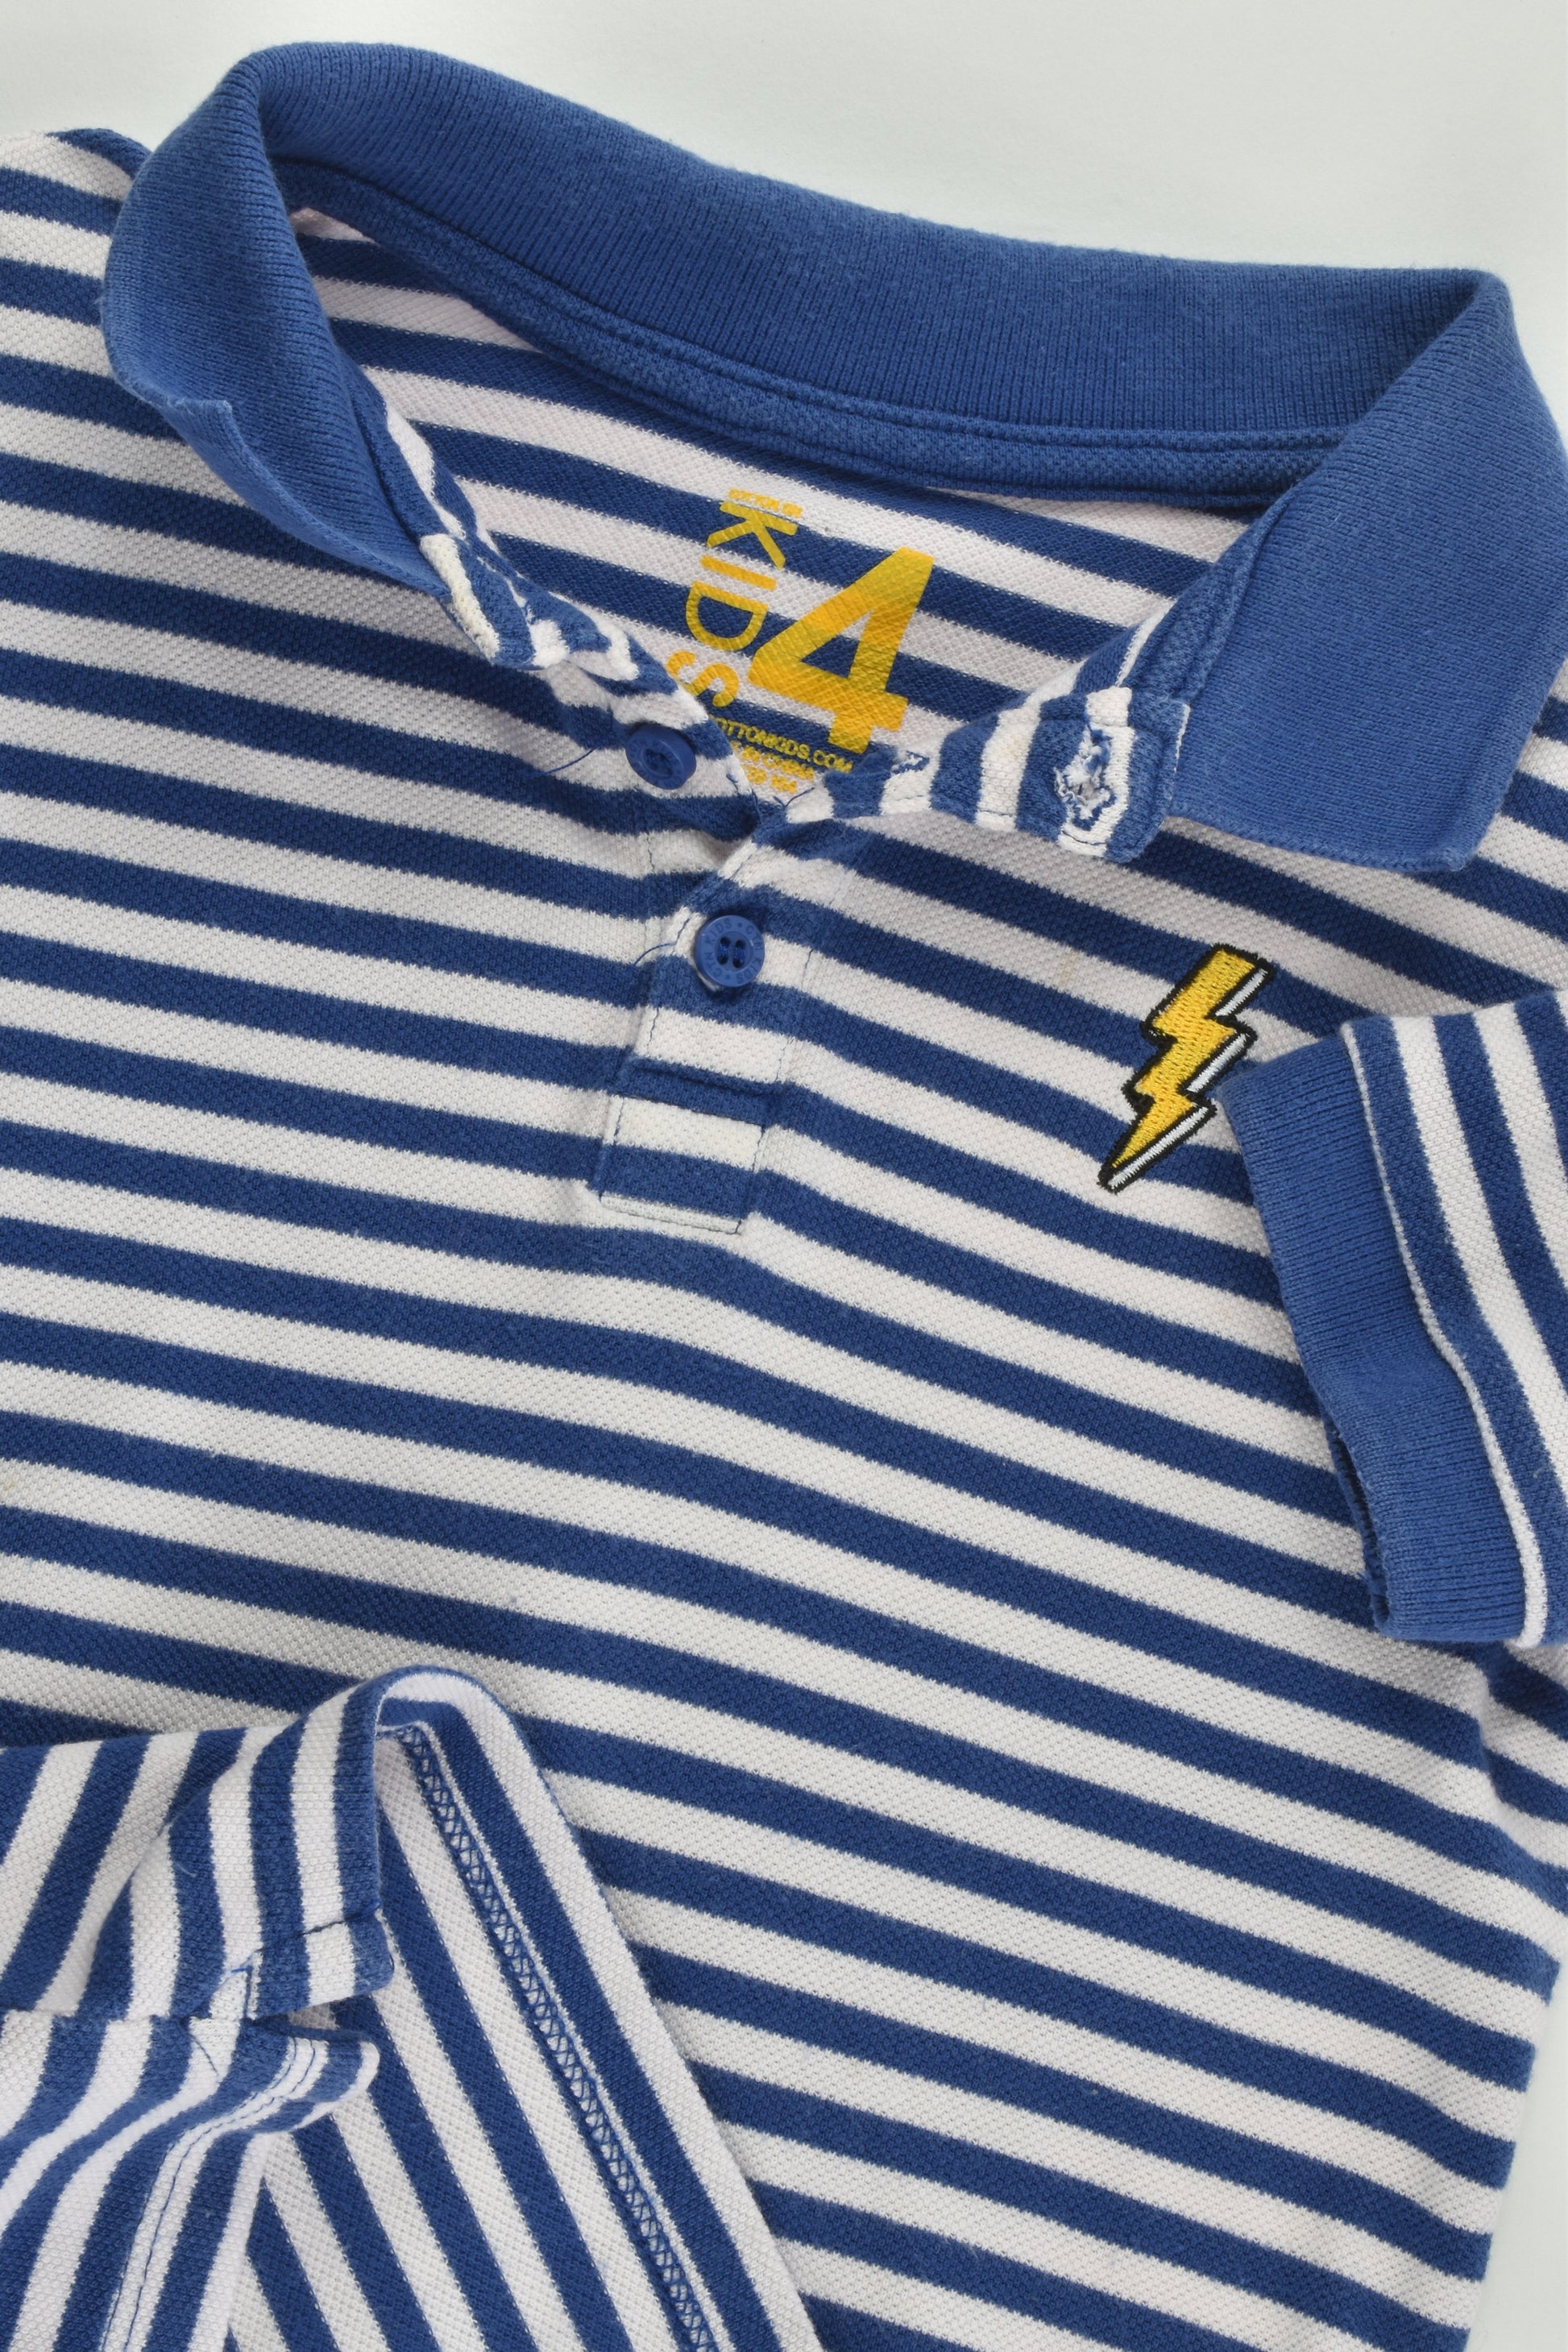 Cotton On Kids Size 4 Striped Lighting Polo Shirt